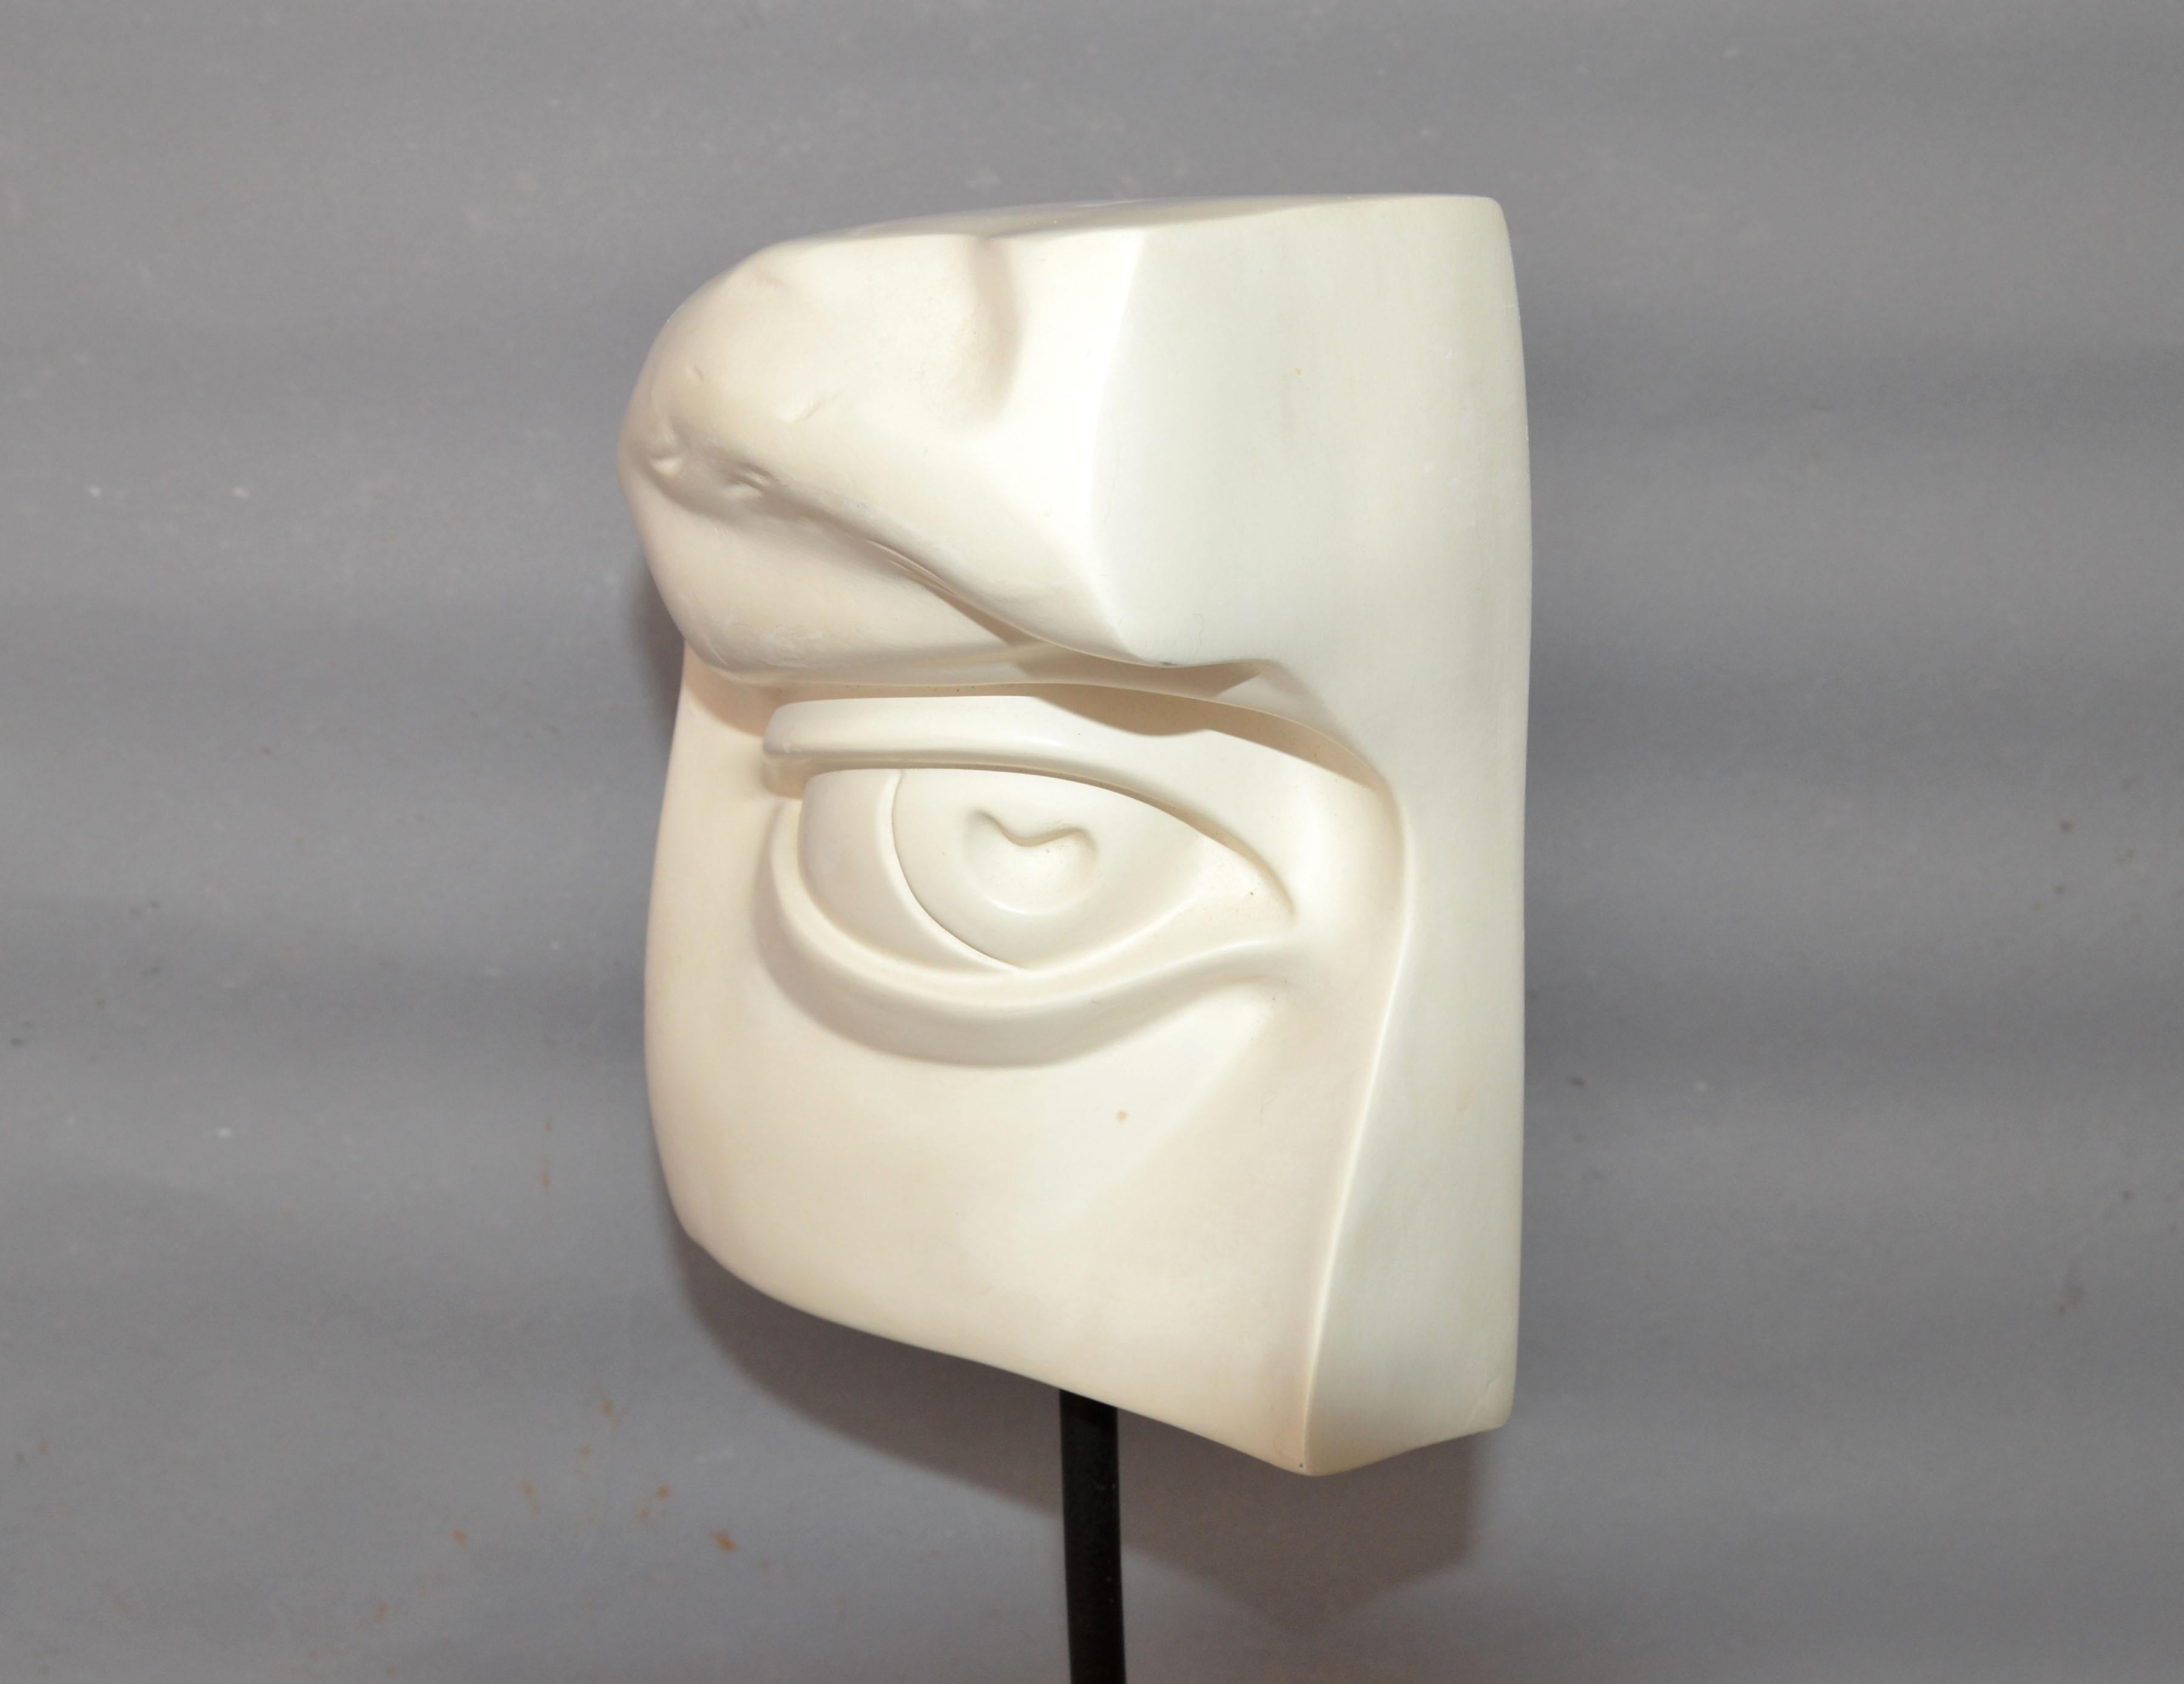 American Missing Eye of David Black & White Sculpture Plaster on Wood Mid-Century Modern For Sale